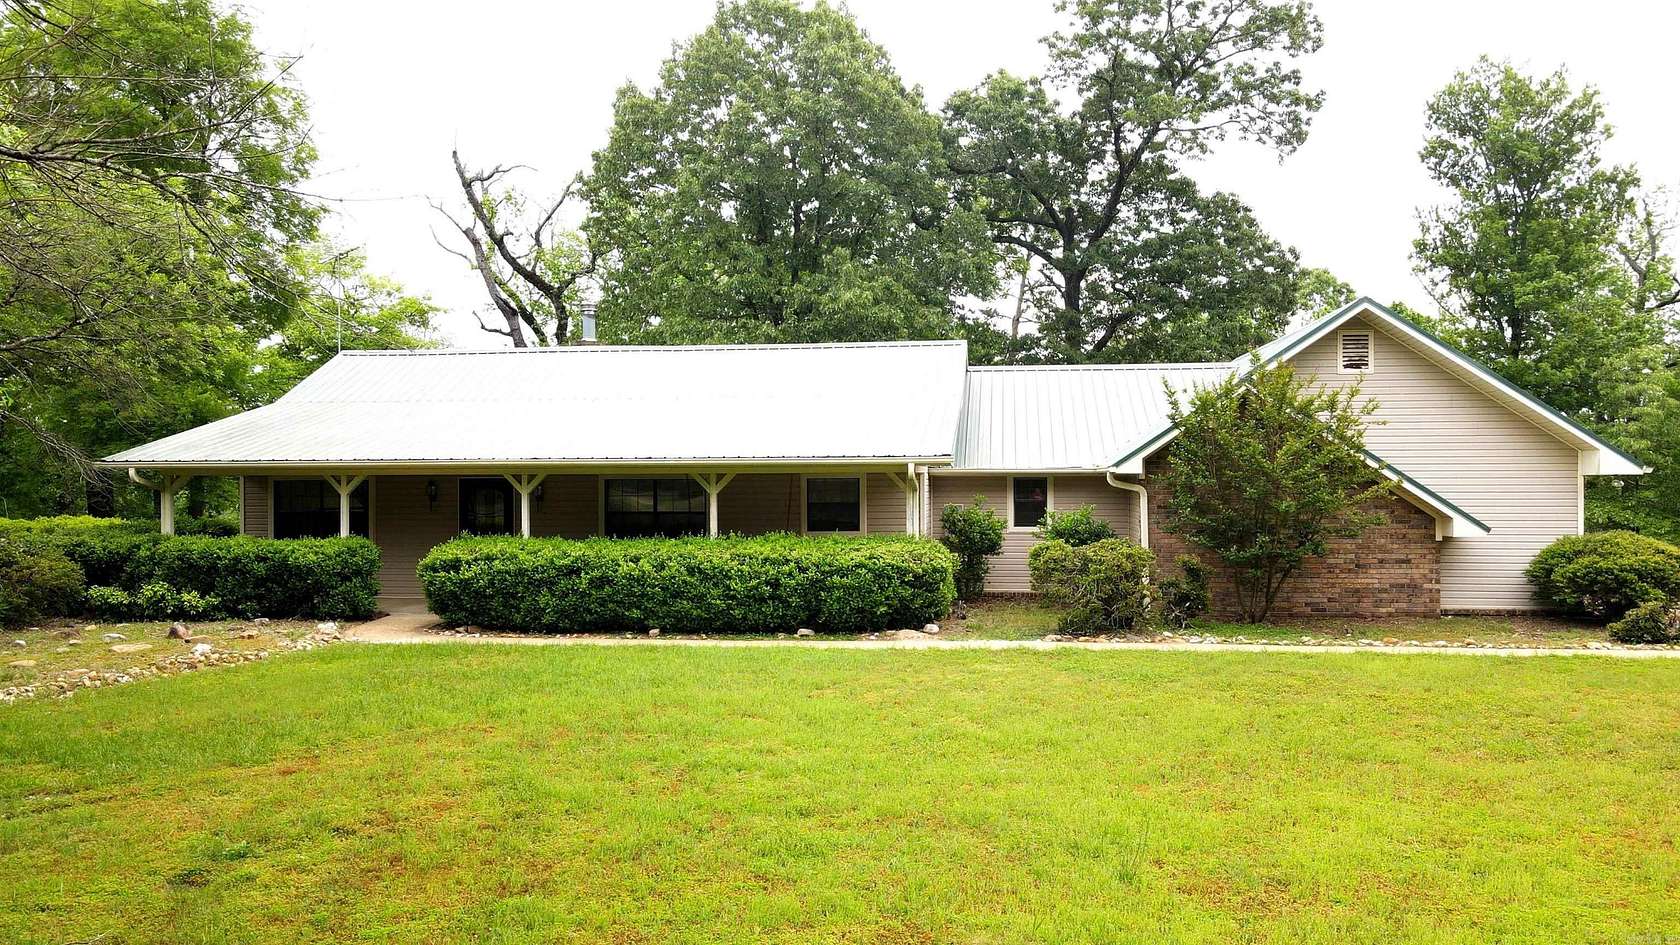 11.4 Acres of Land with Home for Sale in Arkadelphia, Arkansas